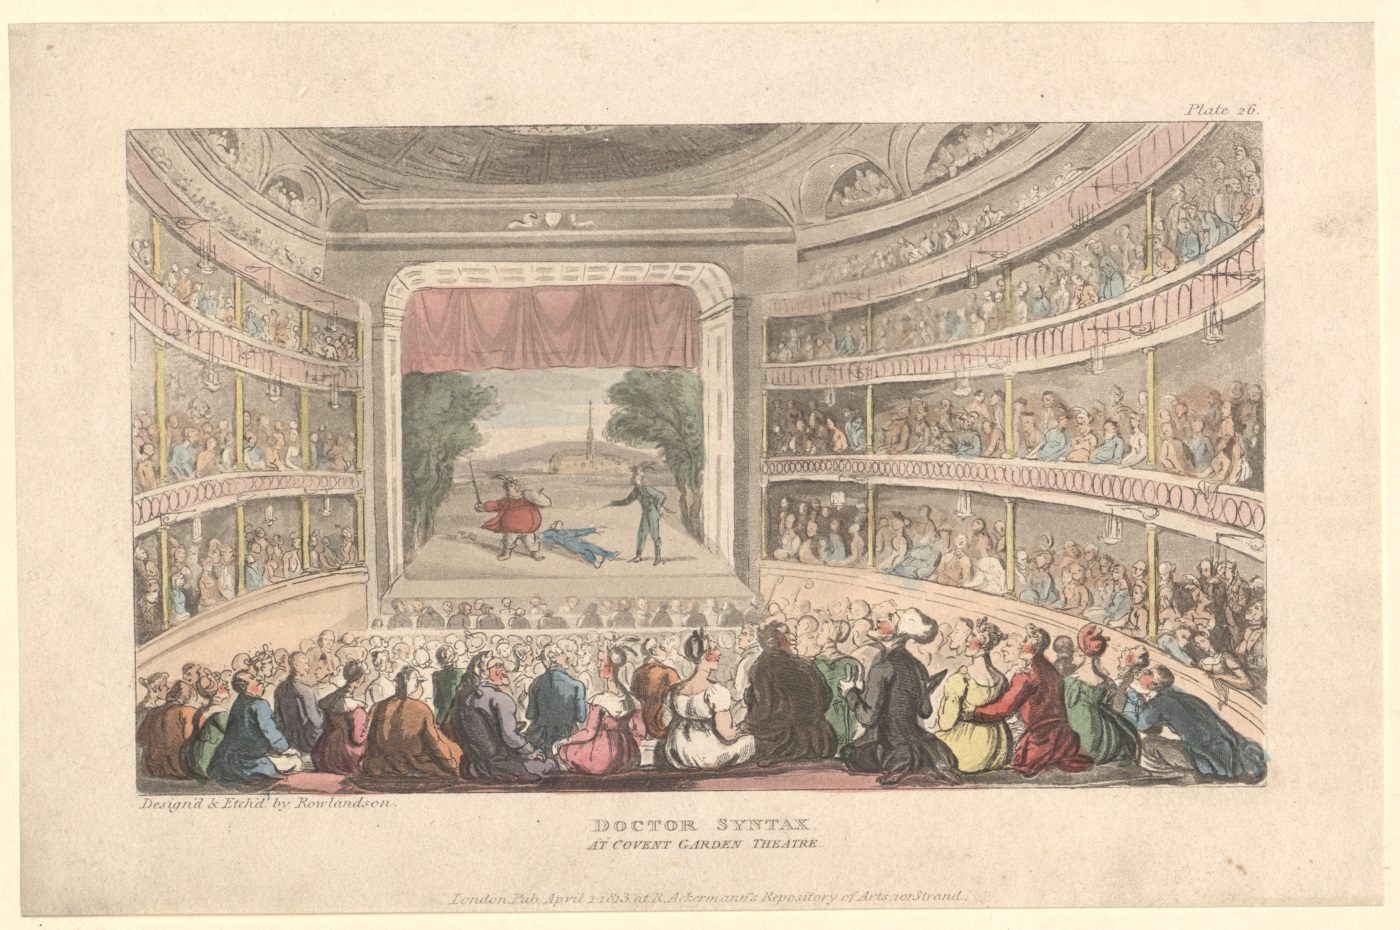 Covent Garden Theatre, an engraving of 1813 John Johnson Collection, Bodleian Libraries